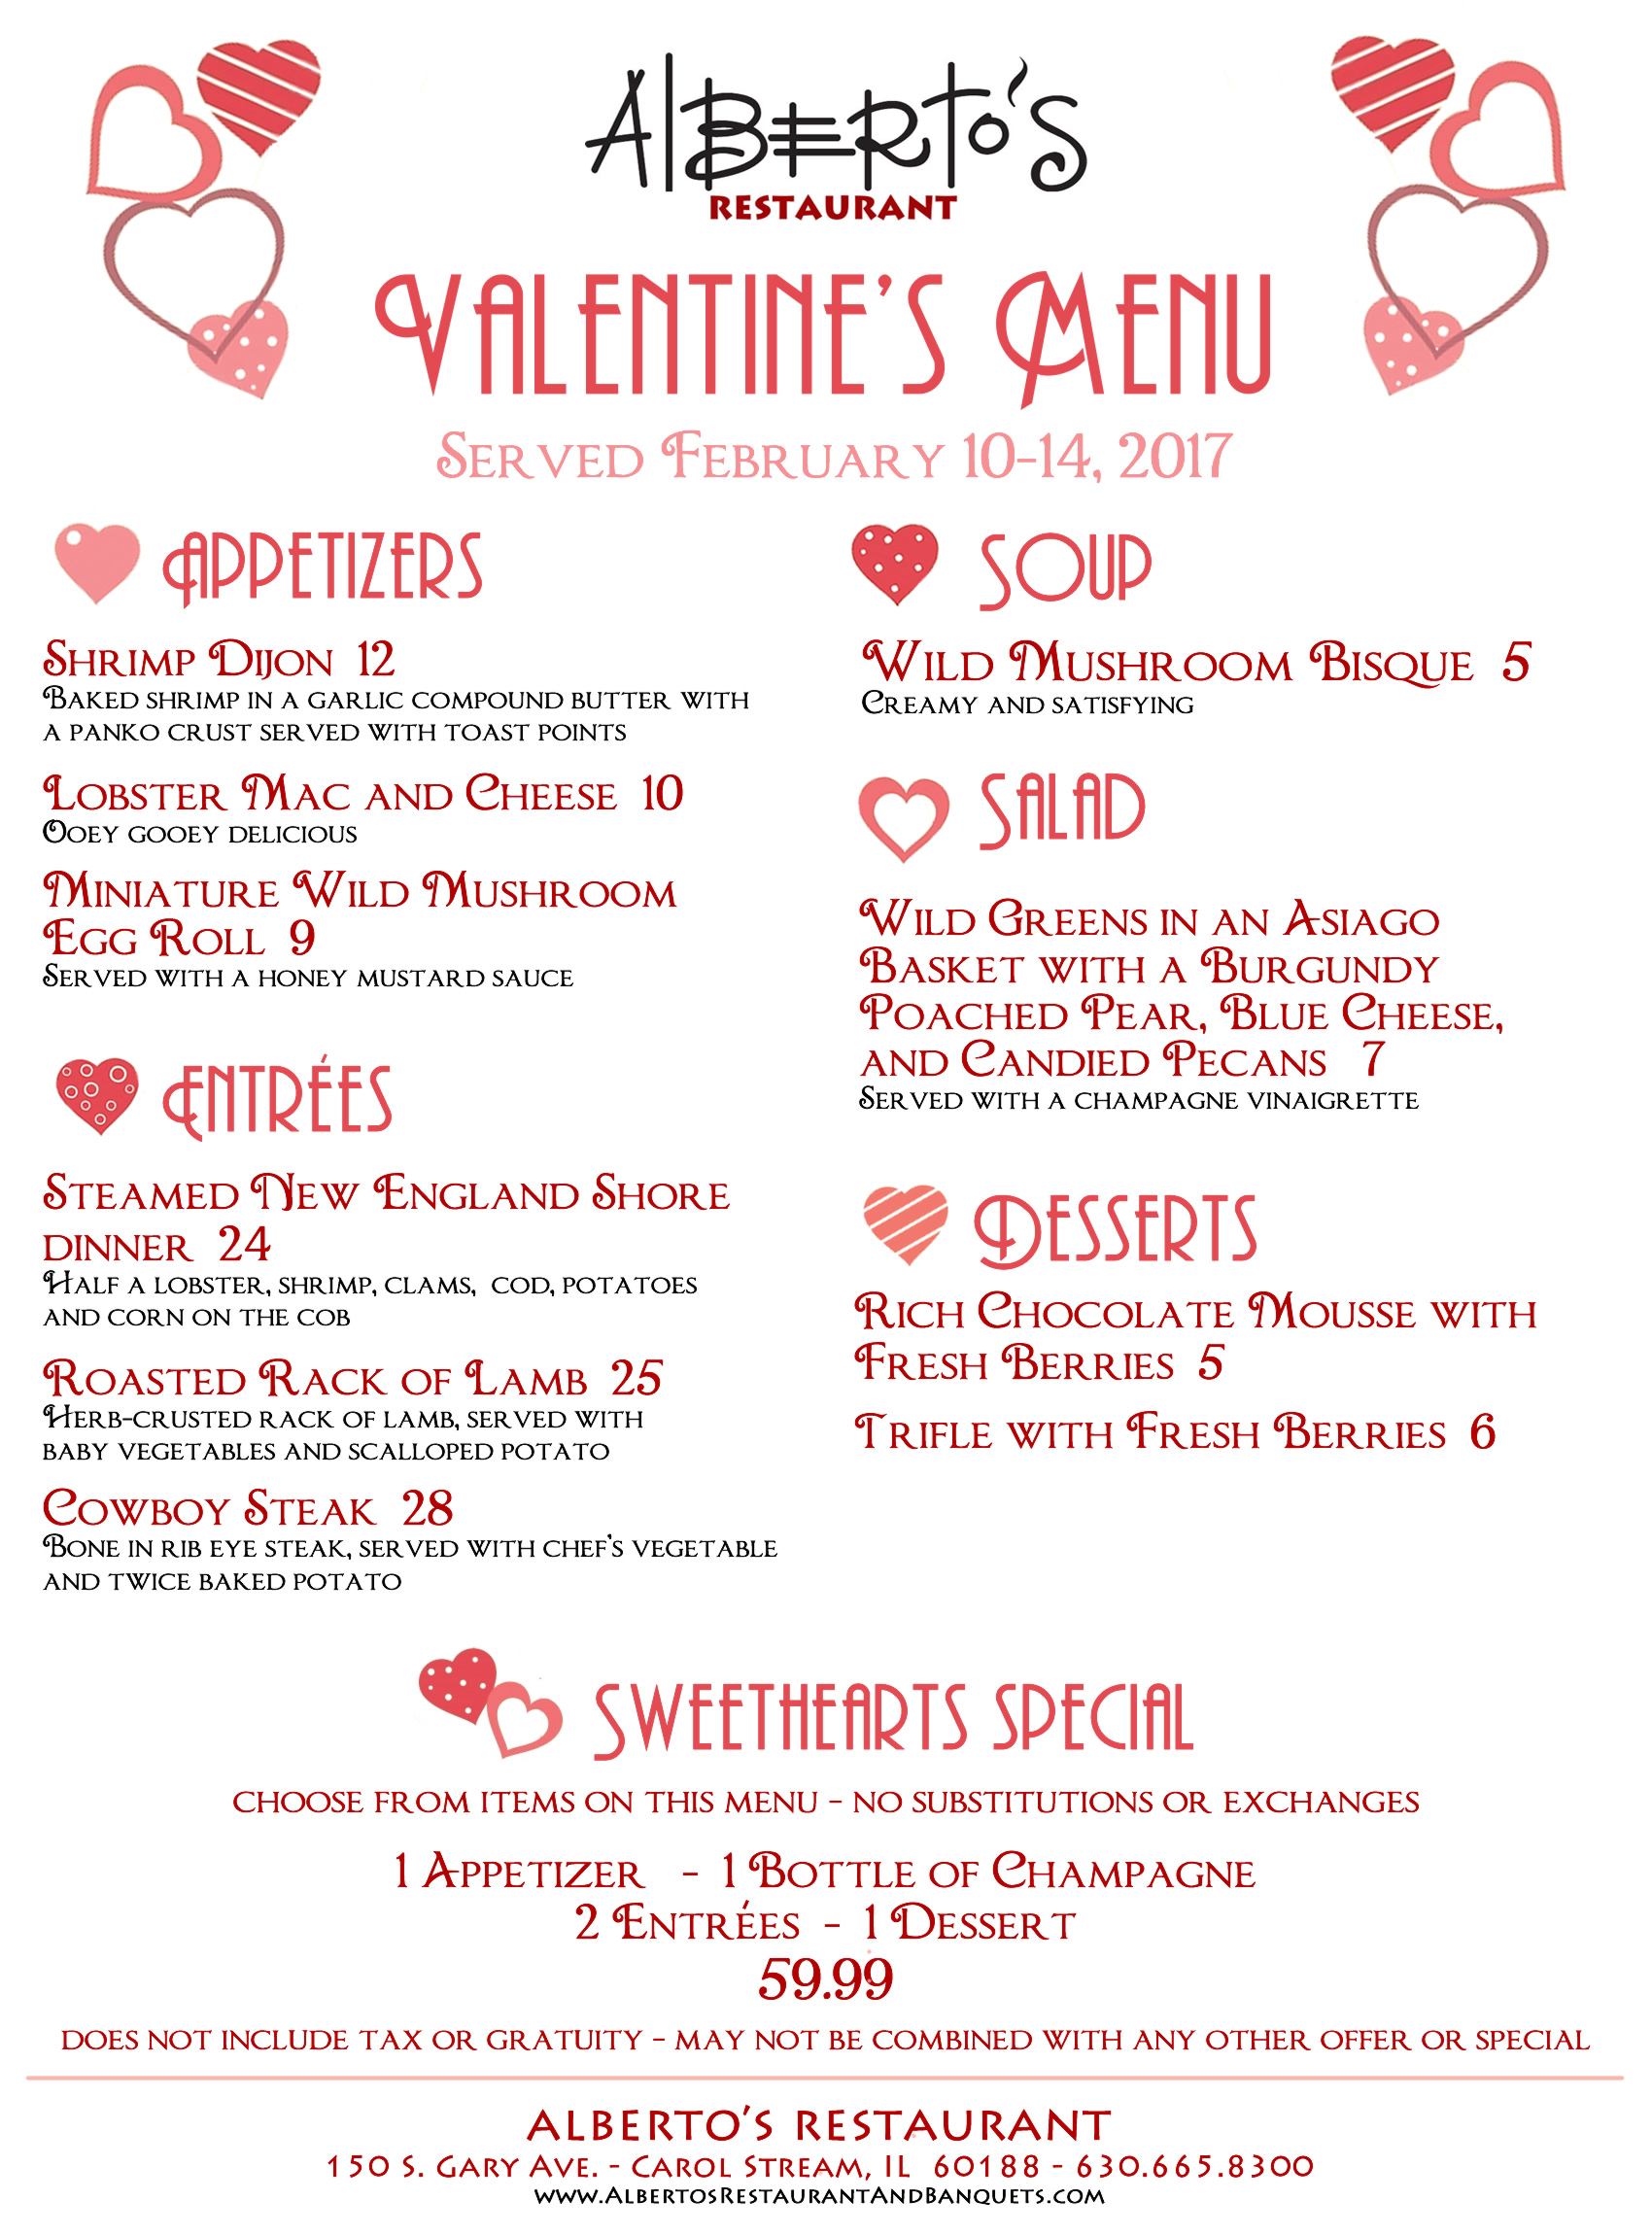 Celebrate Valentine’s Day with A Romantic Dinner for 2 at Alberto’s Restaurant in Carol Stream